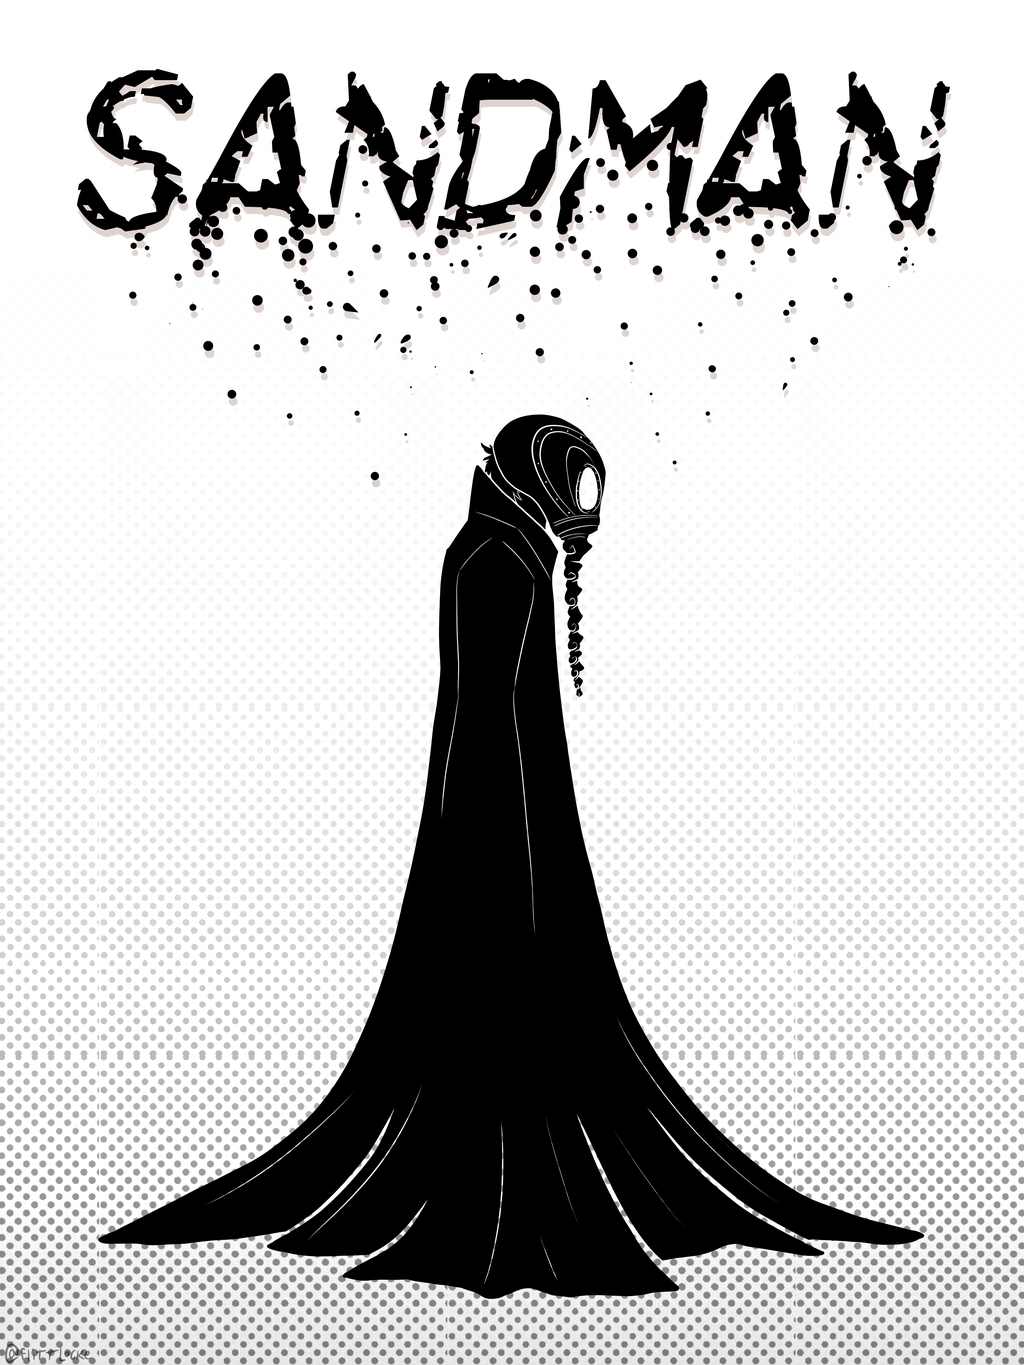 Most recent image: Sandman